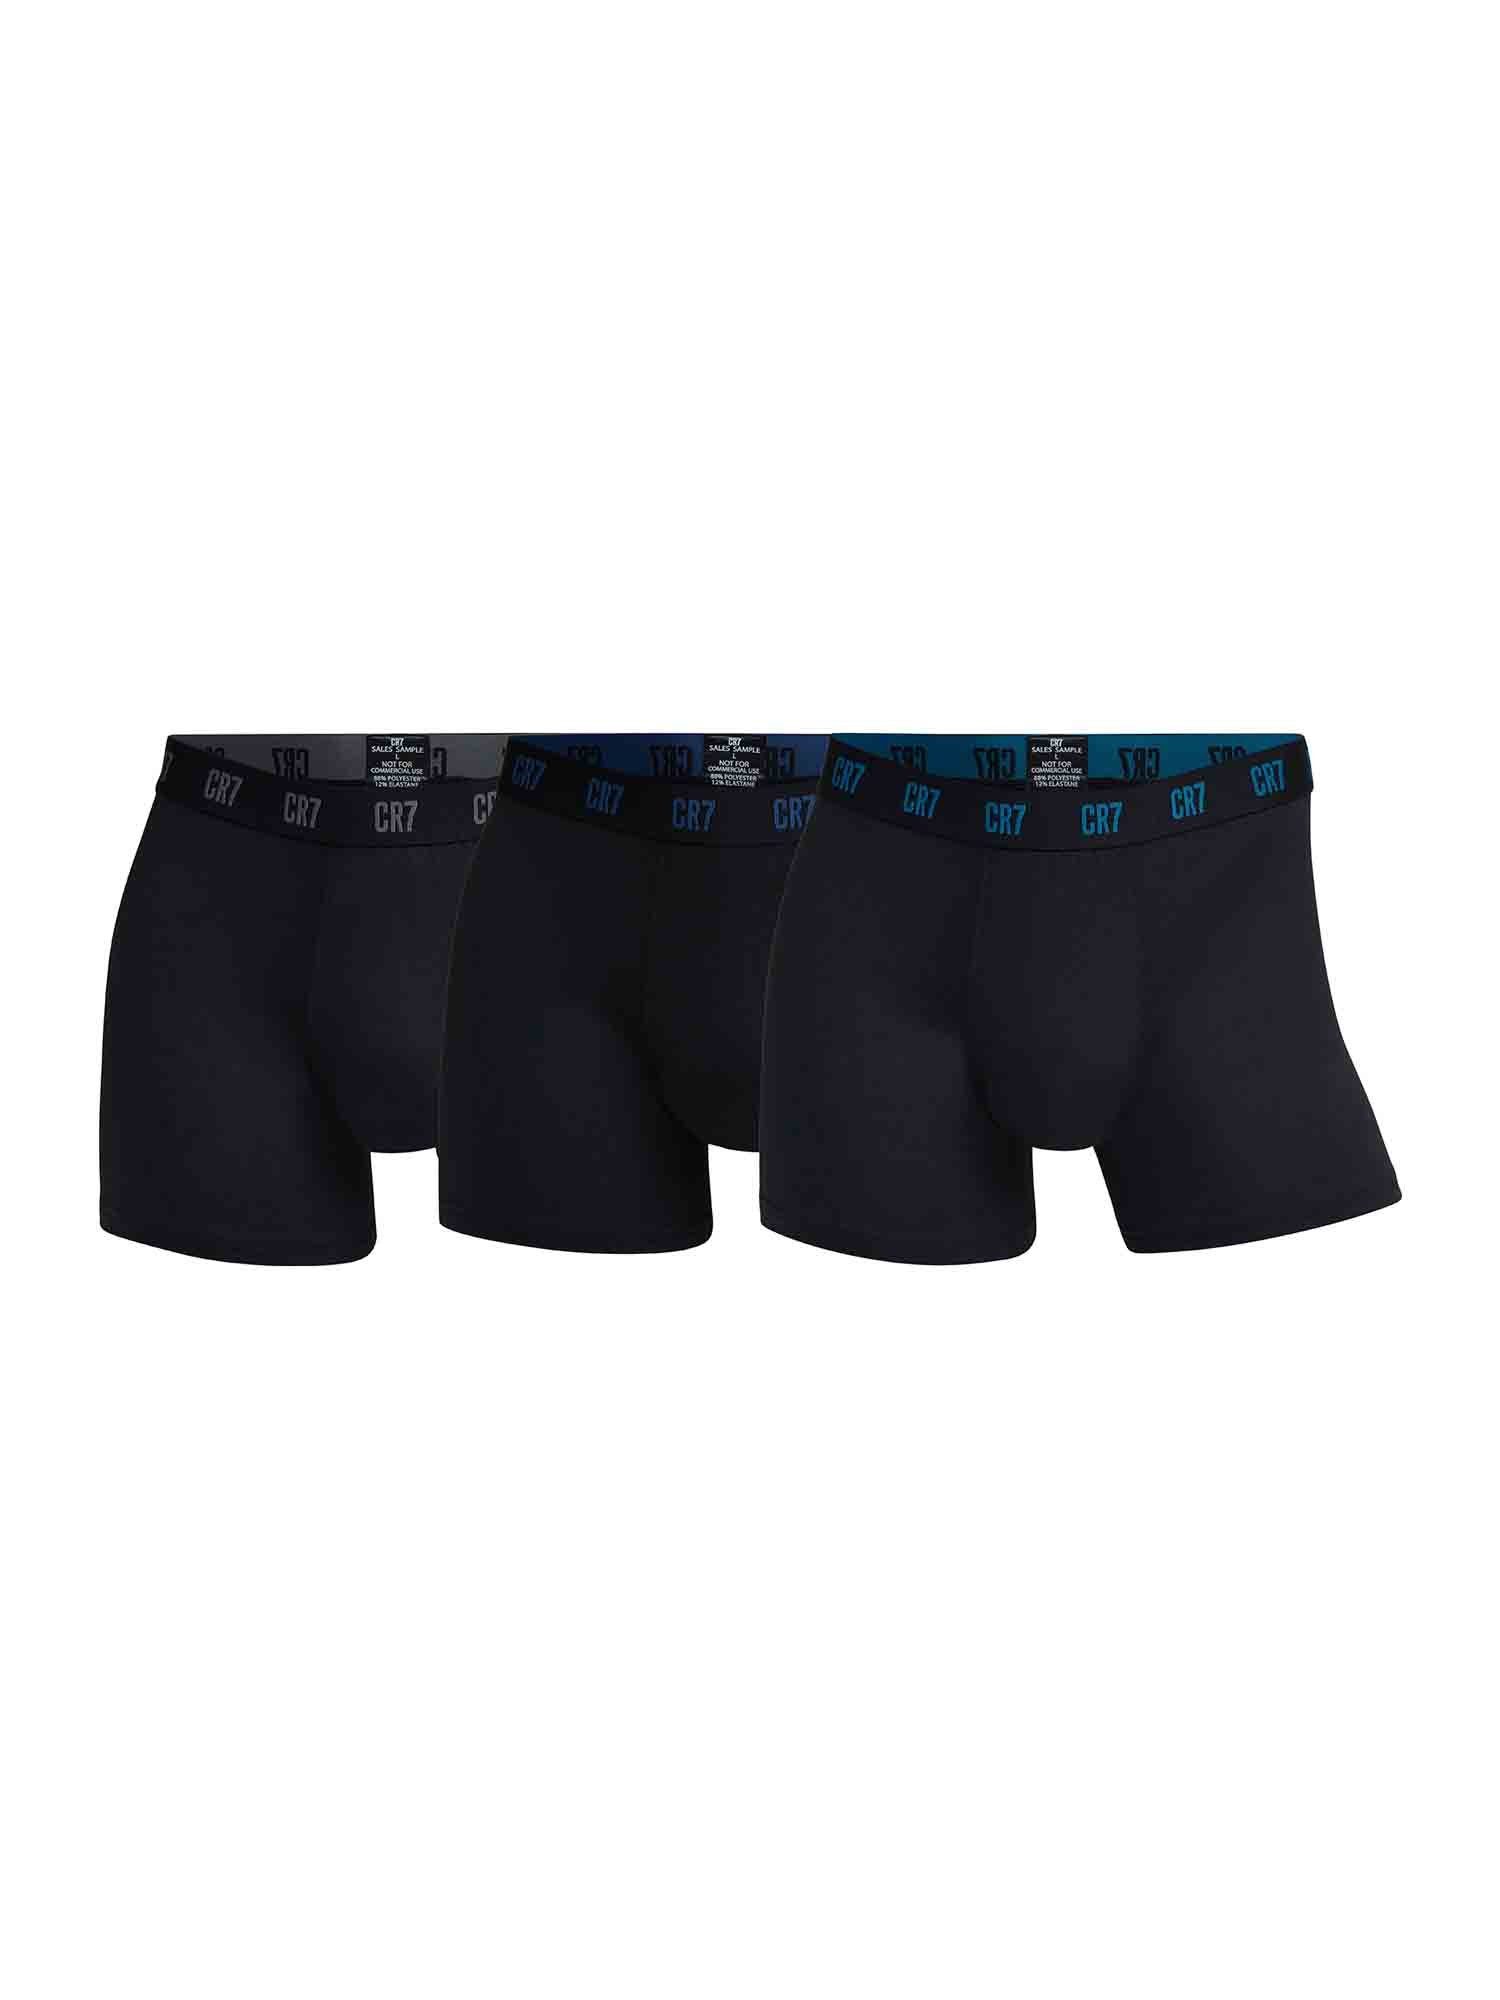 Multipack Boxershorts Pants 18 Pants Trunks Herren CR7 Retro Retro Multi (3-St) Männer